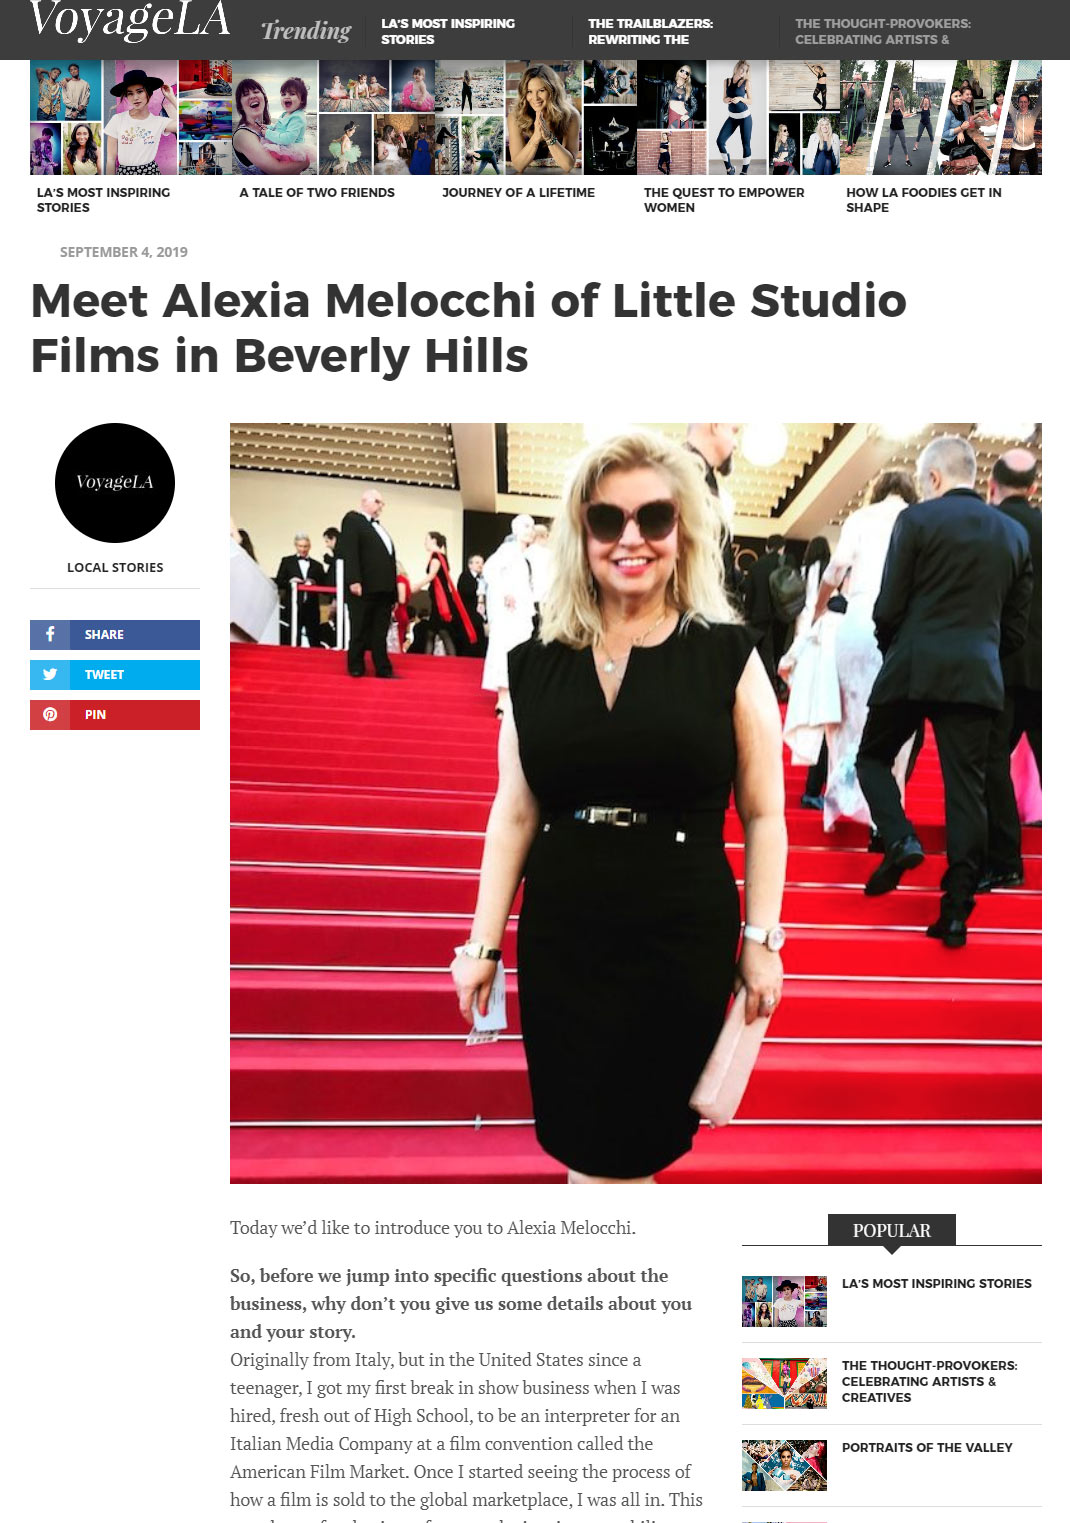 Voyage LA Magazine – Meet Alexia Melocchi of Little Studio Films in Beverly Hills